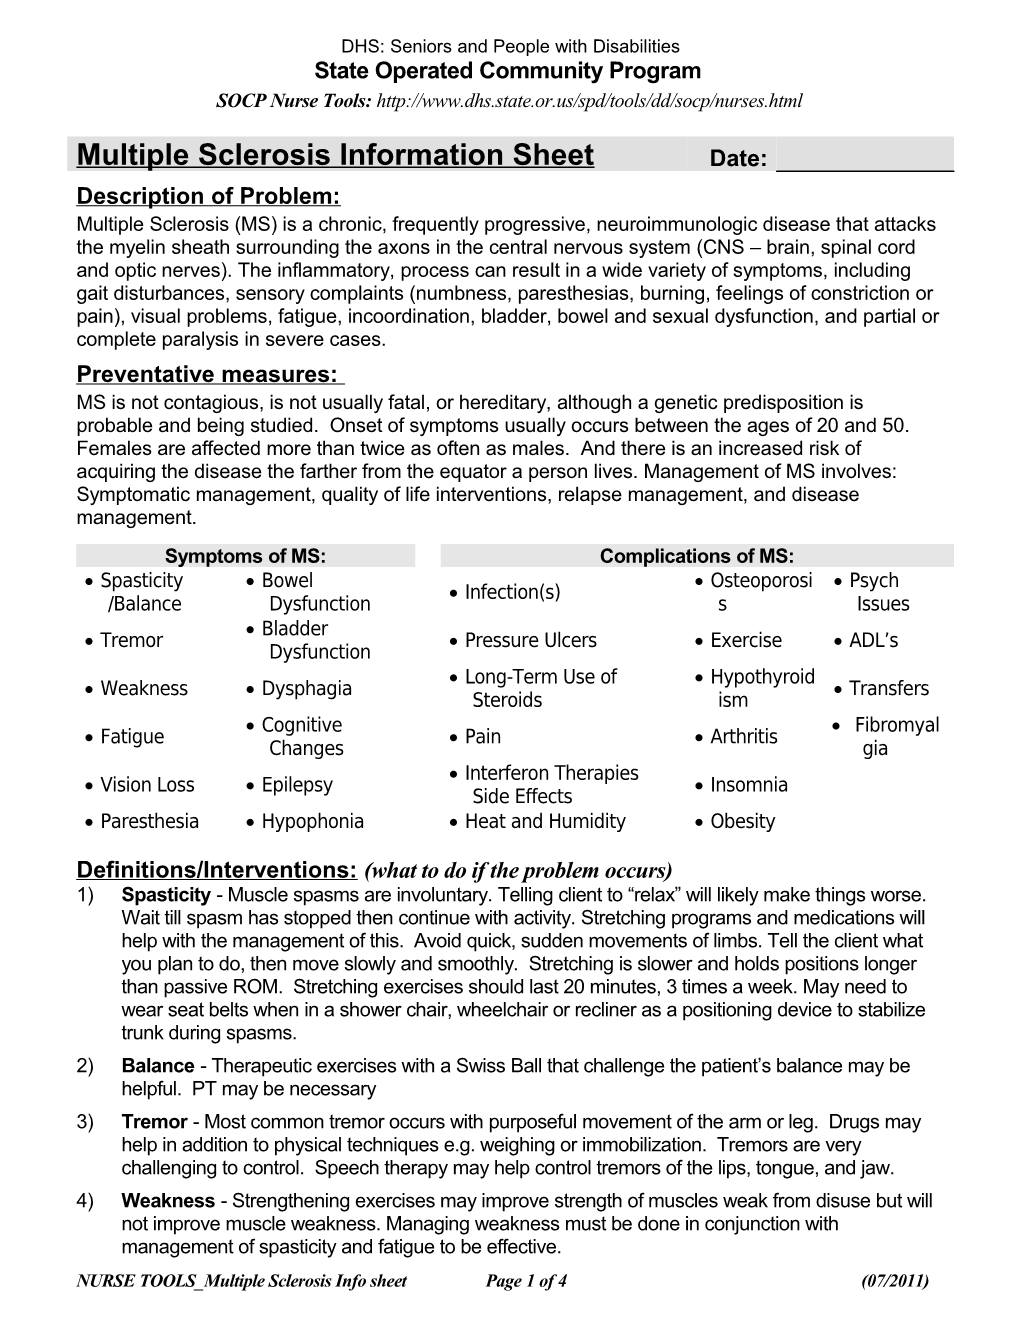 Multiple Sclerosis Info Sheet